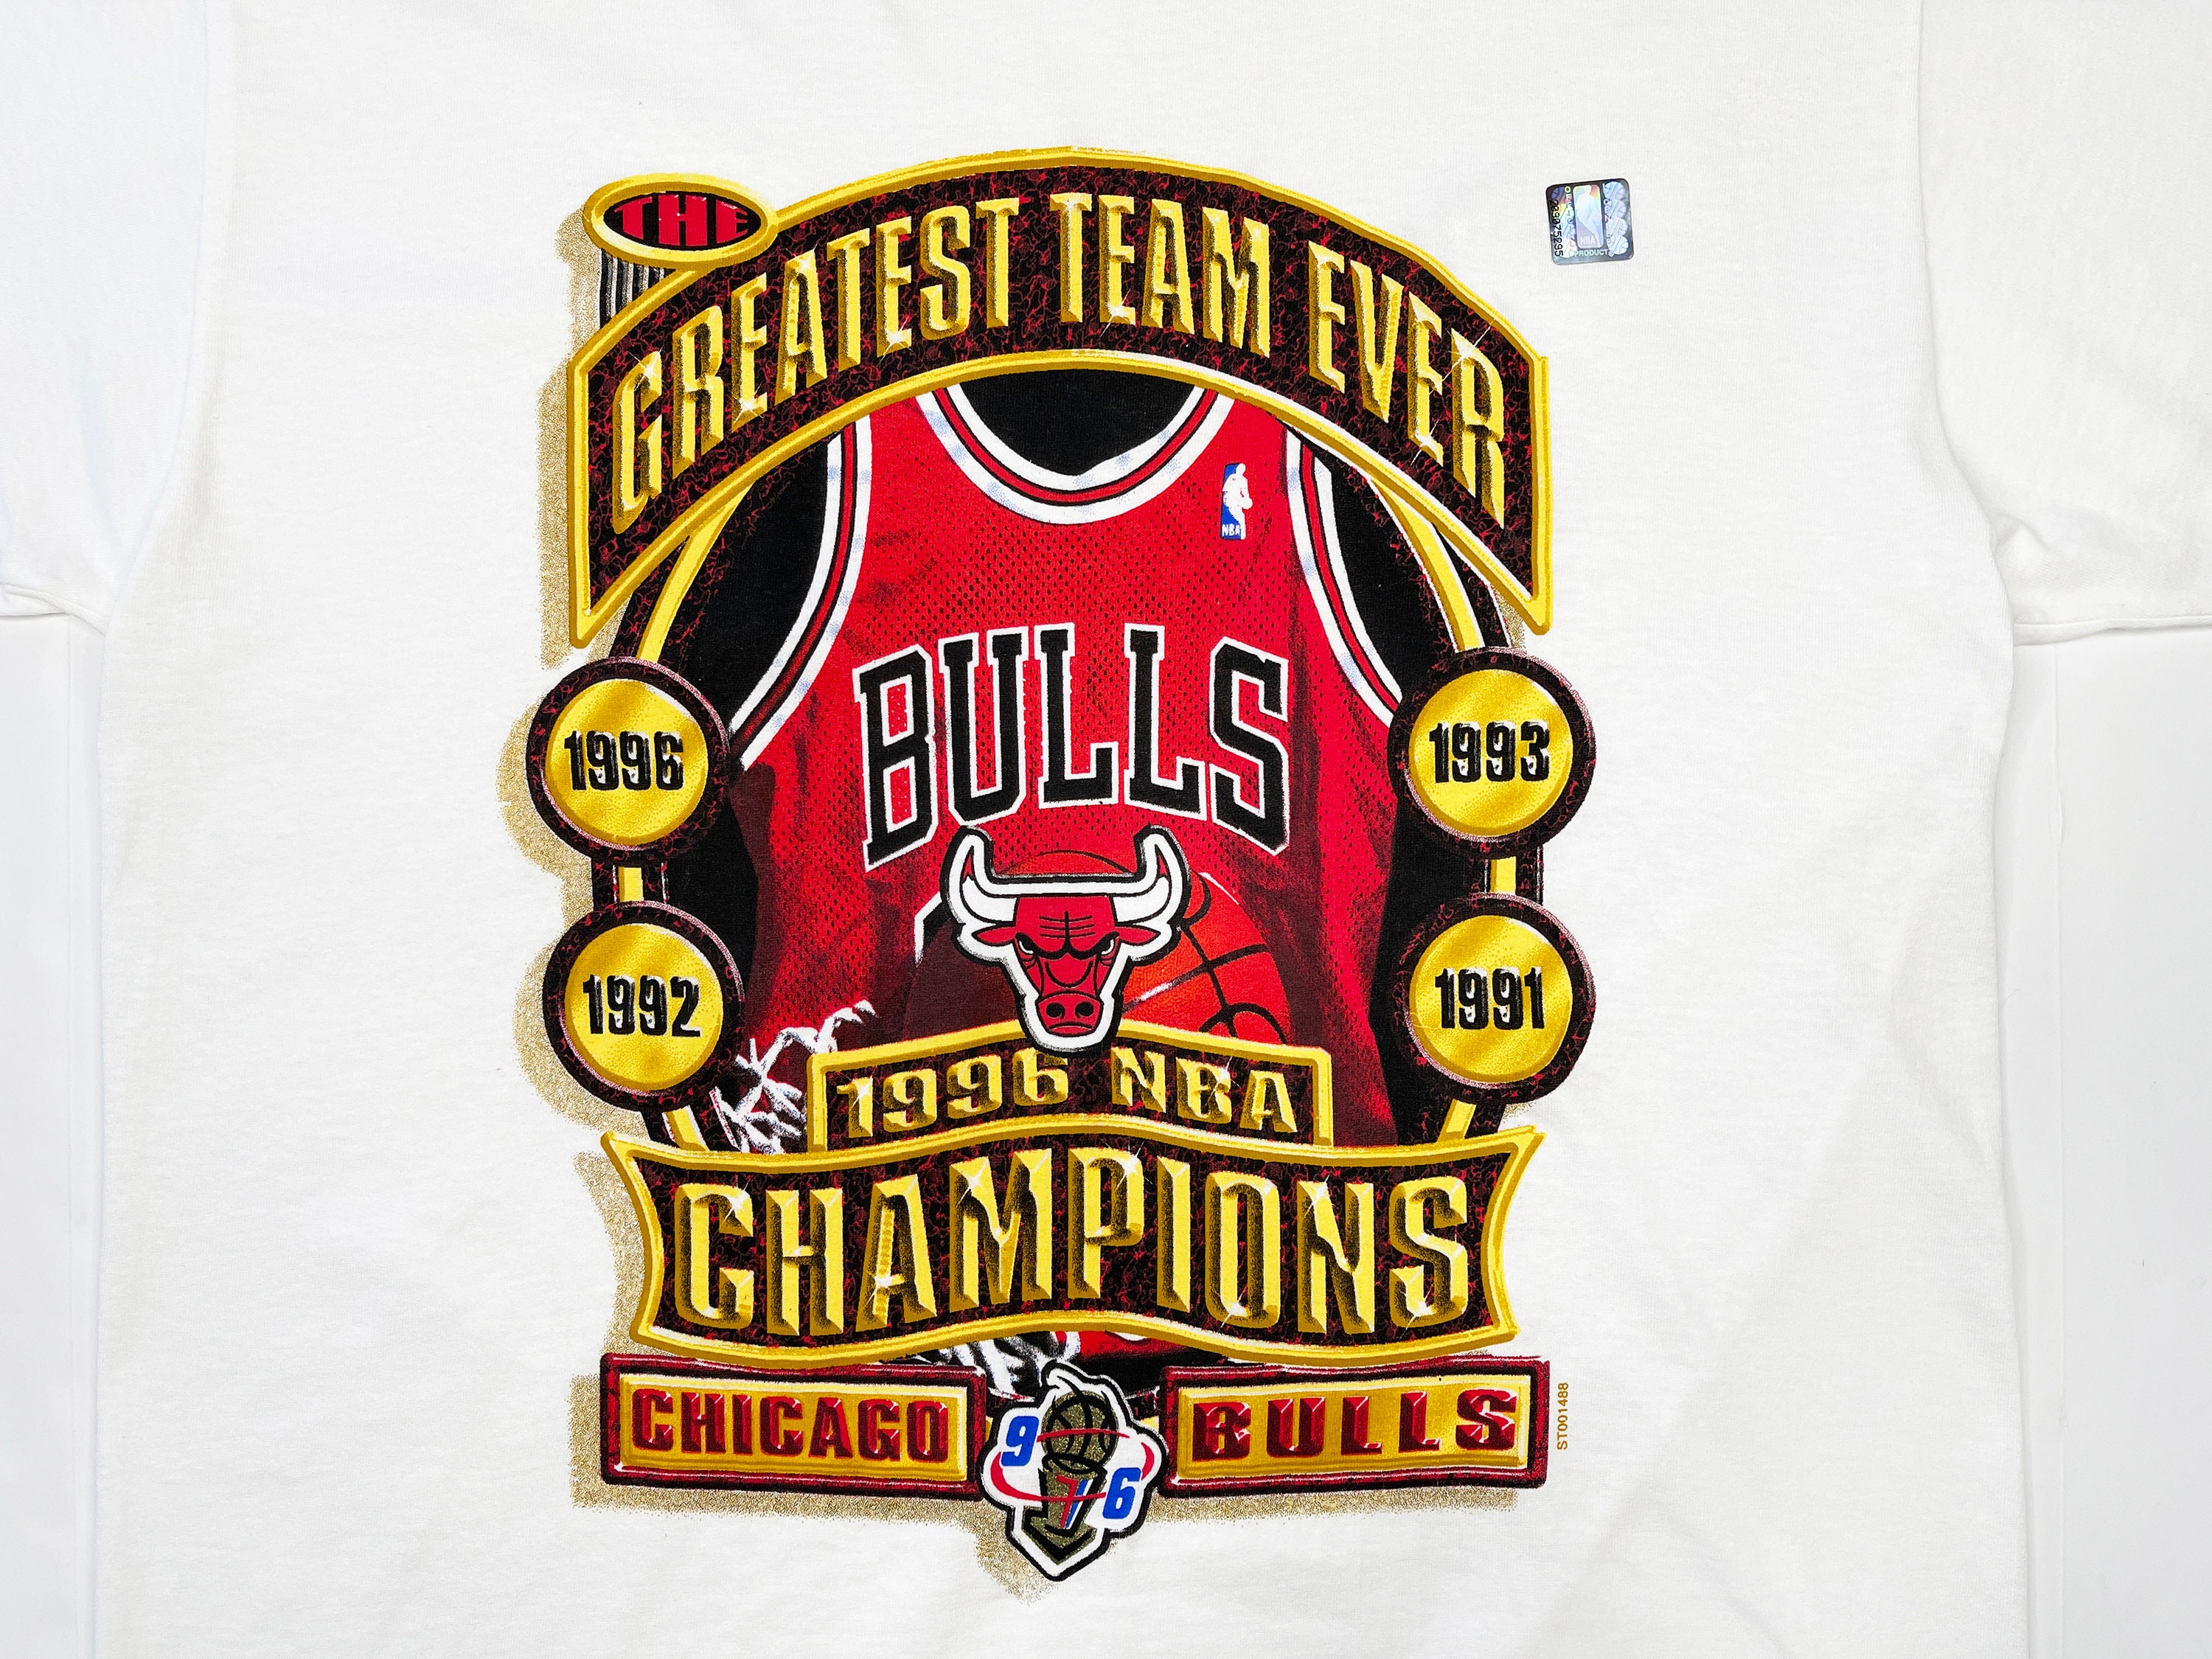 1997 Nba Champions Shirt, Chicago Bulls Shirt 1991 1992 1993 1996